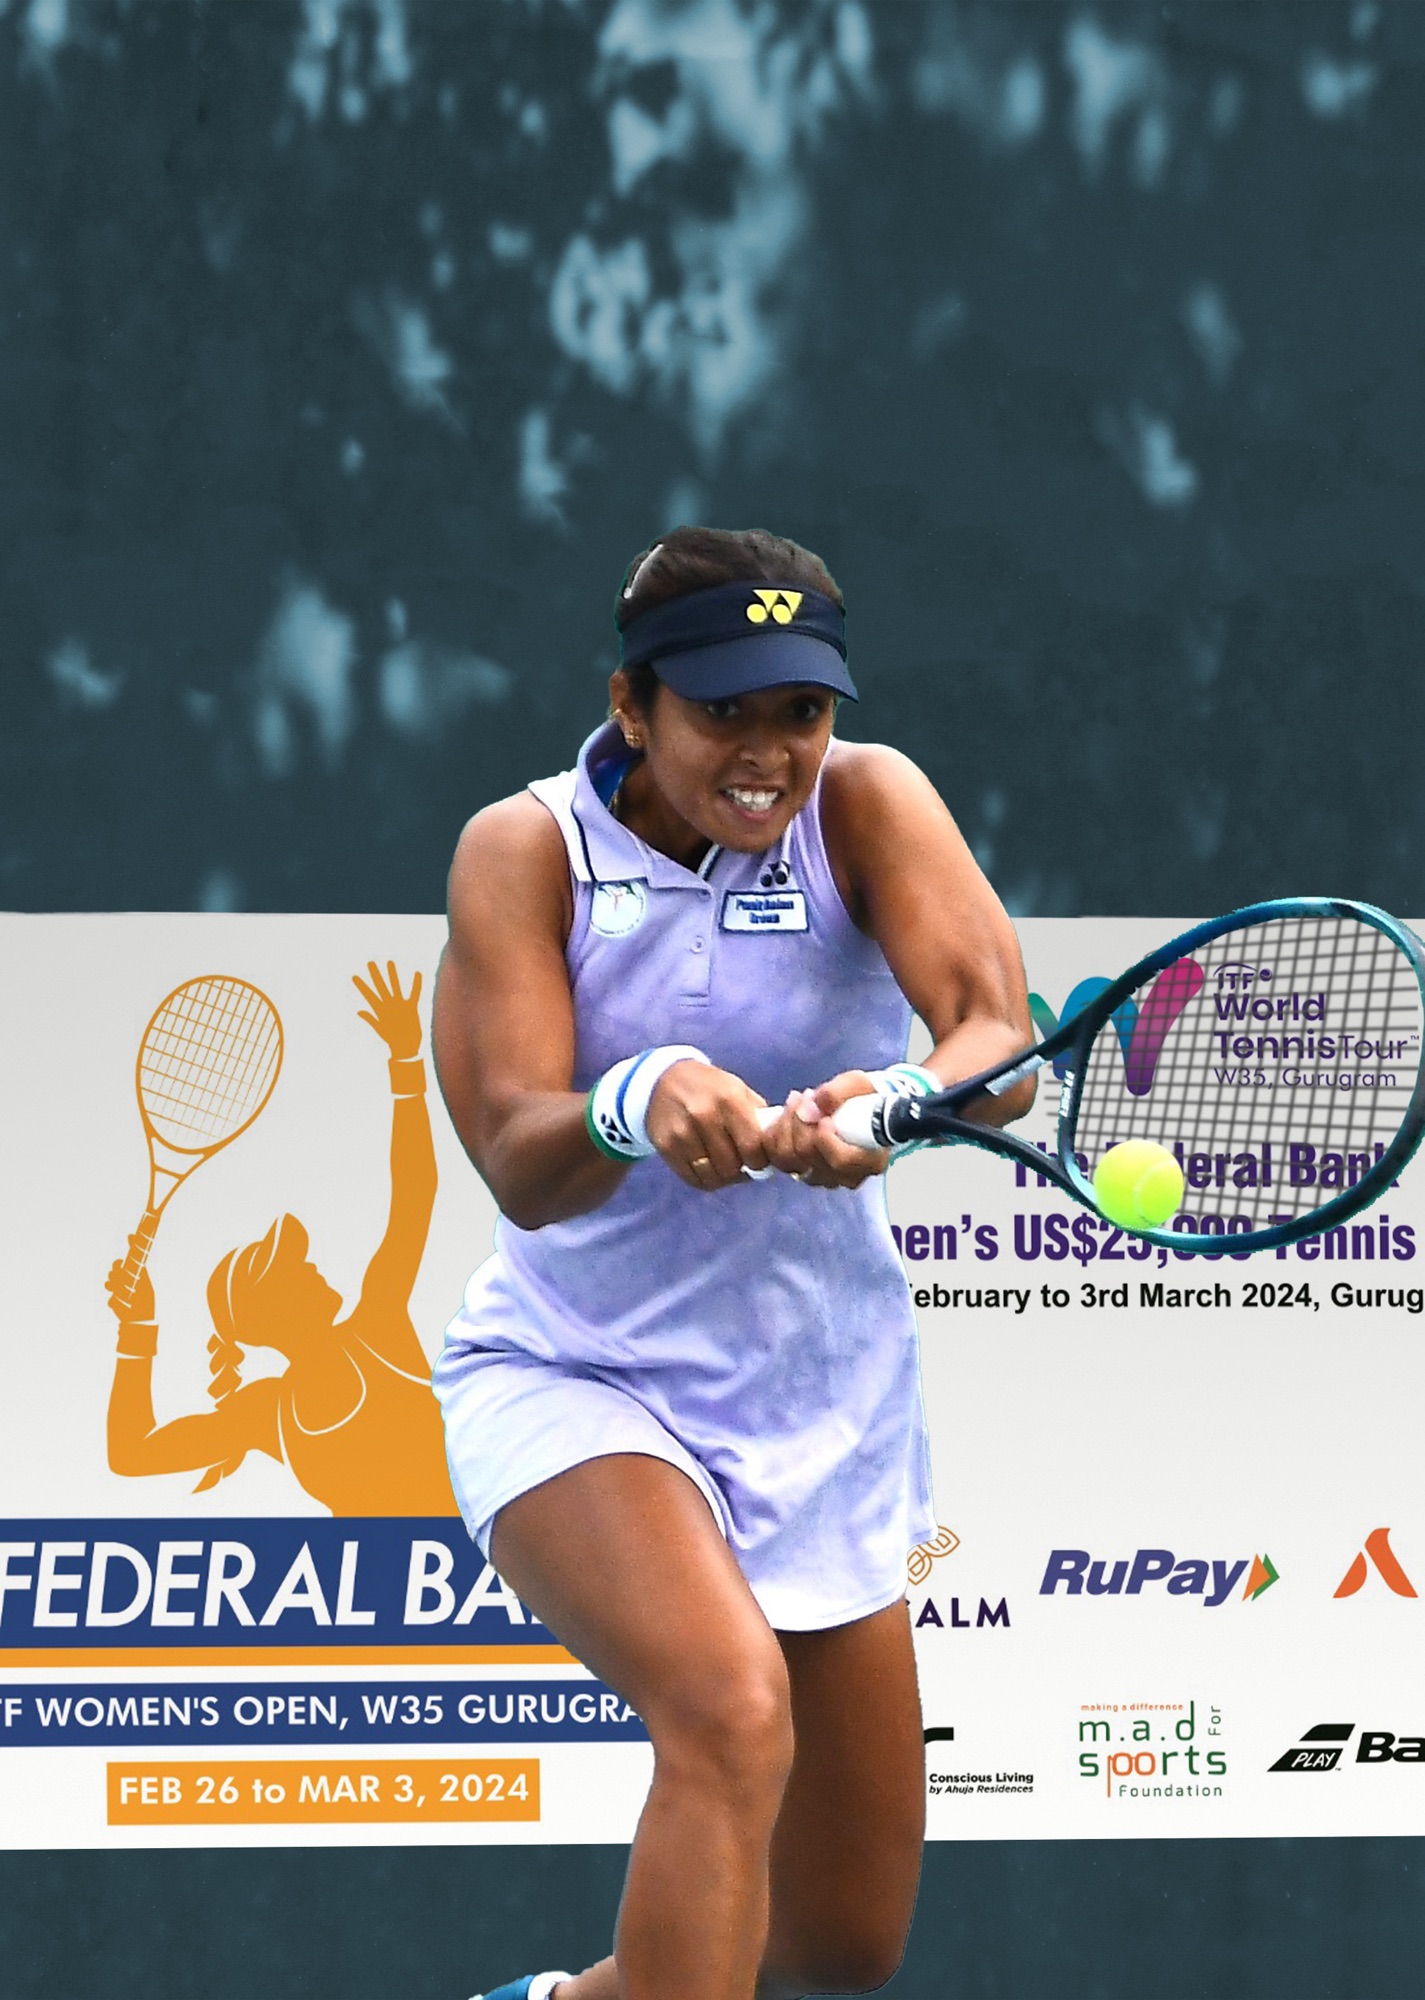 Ankita Raina registers comeback victory to enter semis at Federal Bank ITF Women’s Open